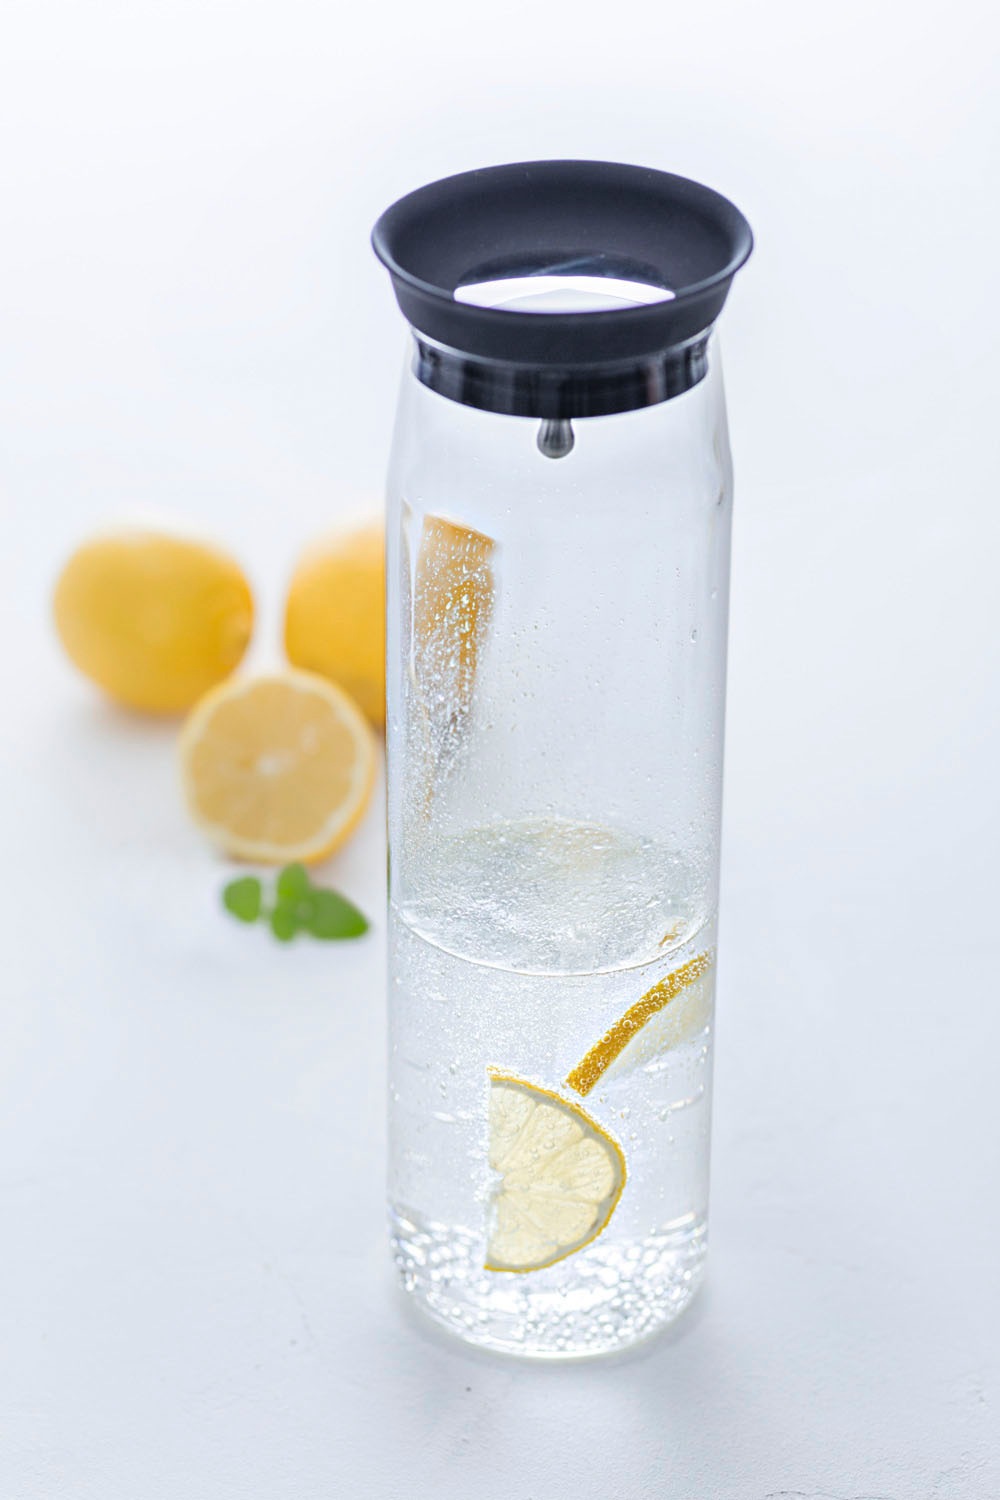 LEONARDO Wasserkaraffe »BRIOSO«, Borosilikatglas, 1000 ml